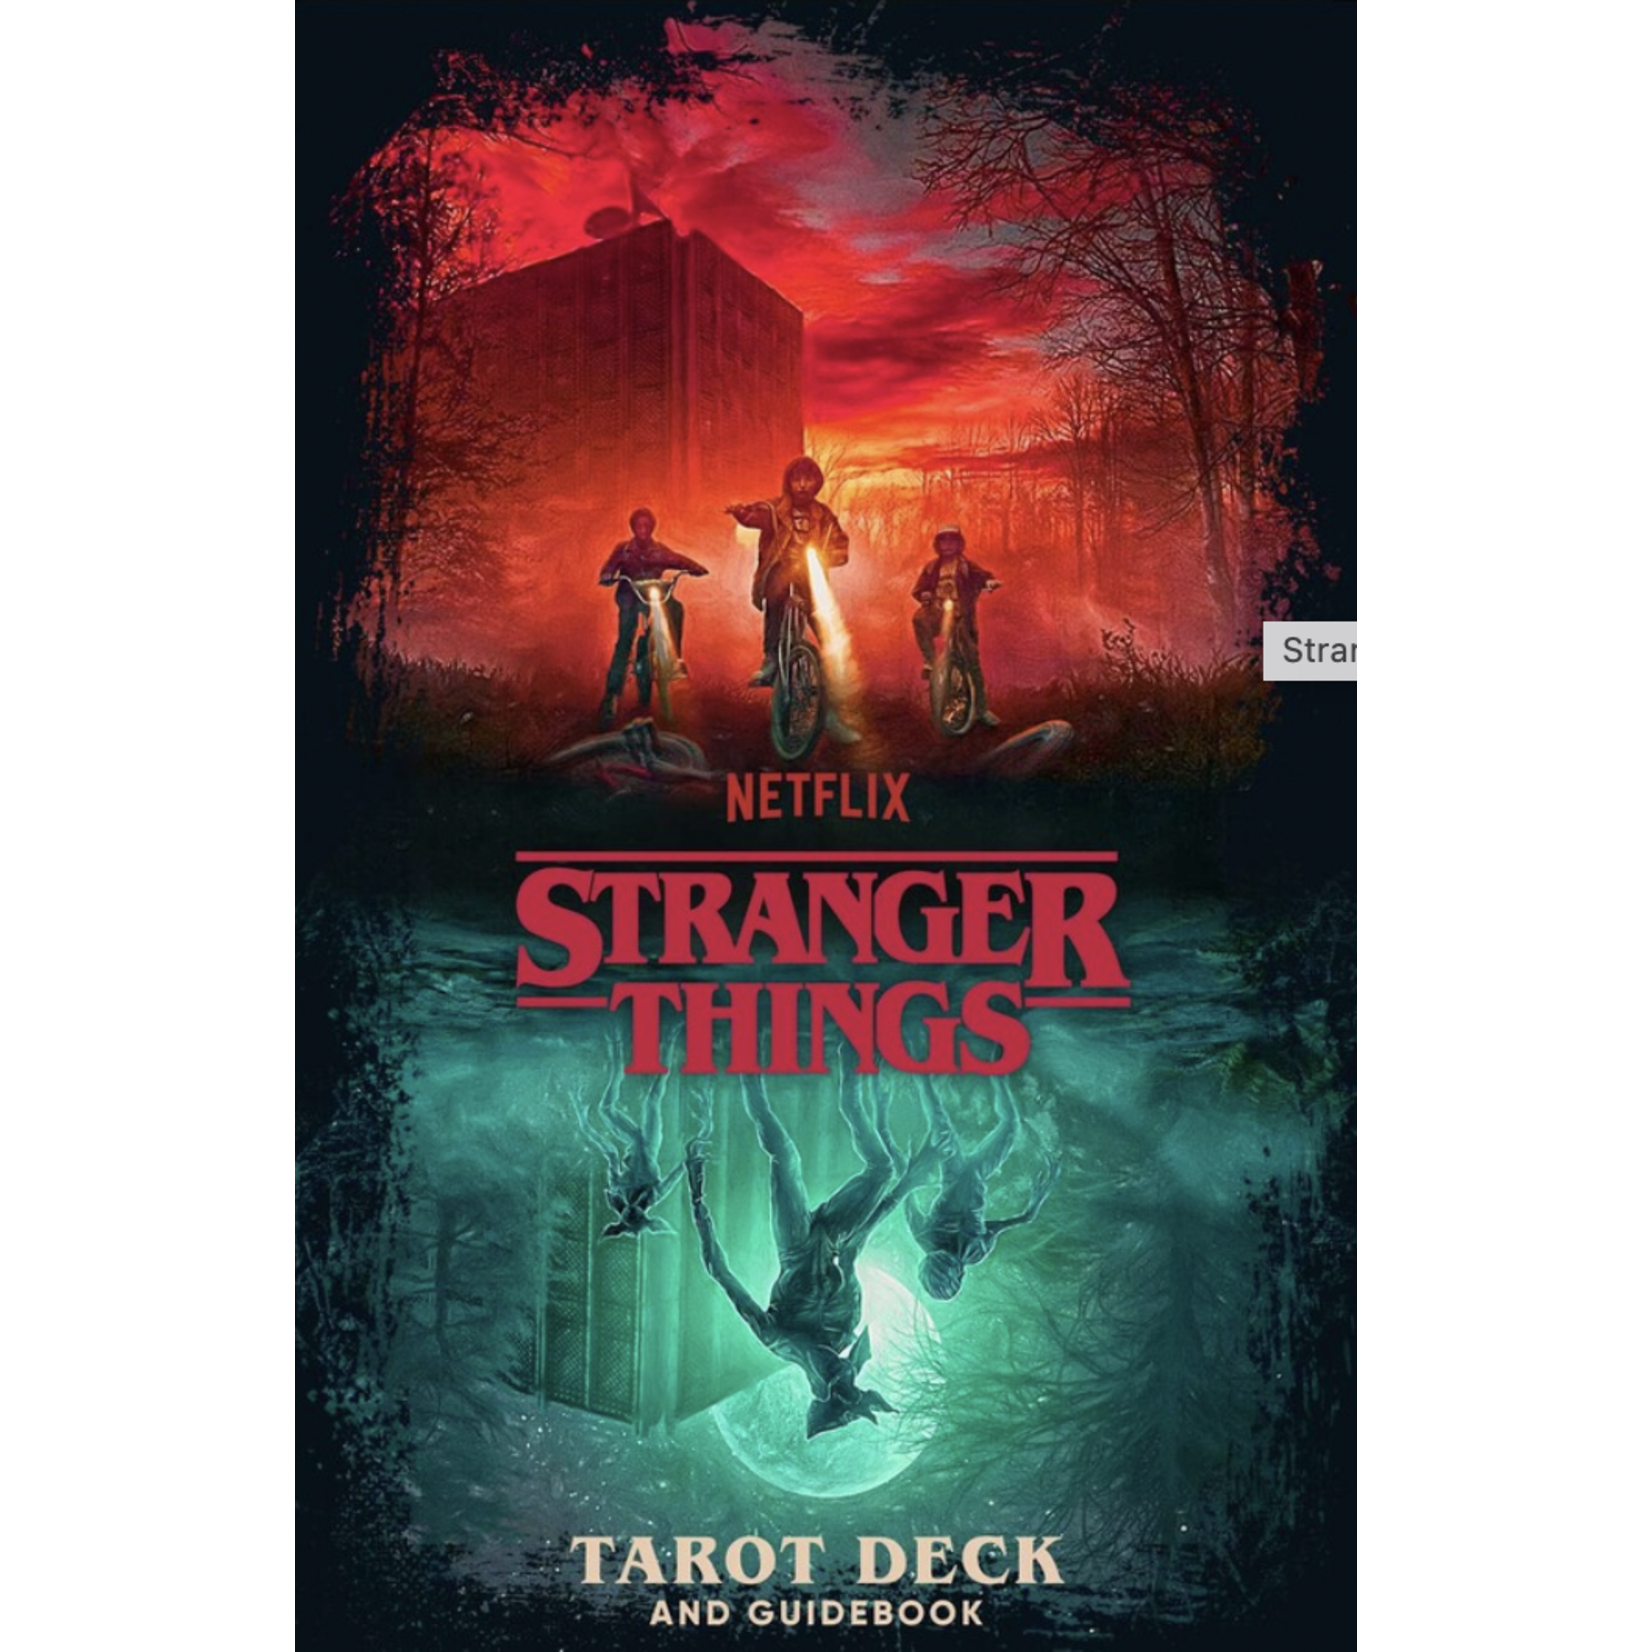 Simon & Schuster STRANGER THINGS TAROT DECK AND GUIDEBOOK